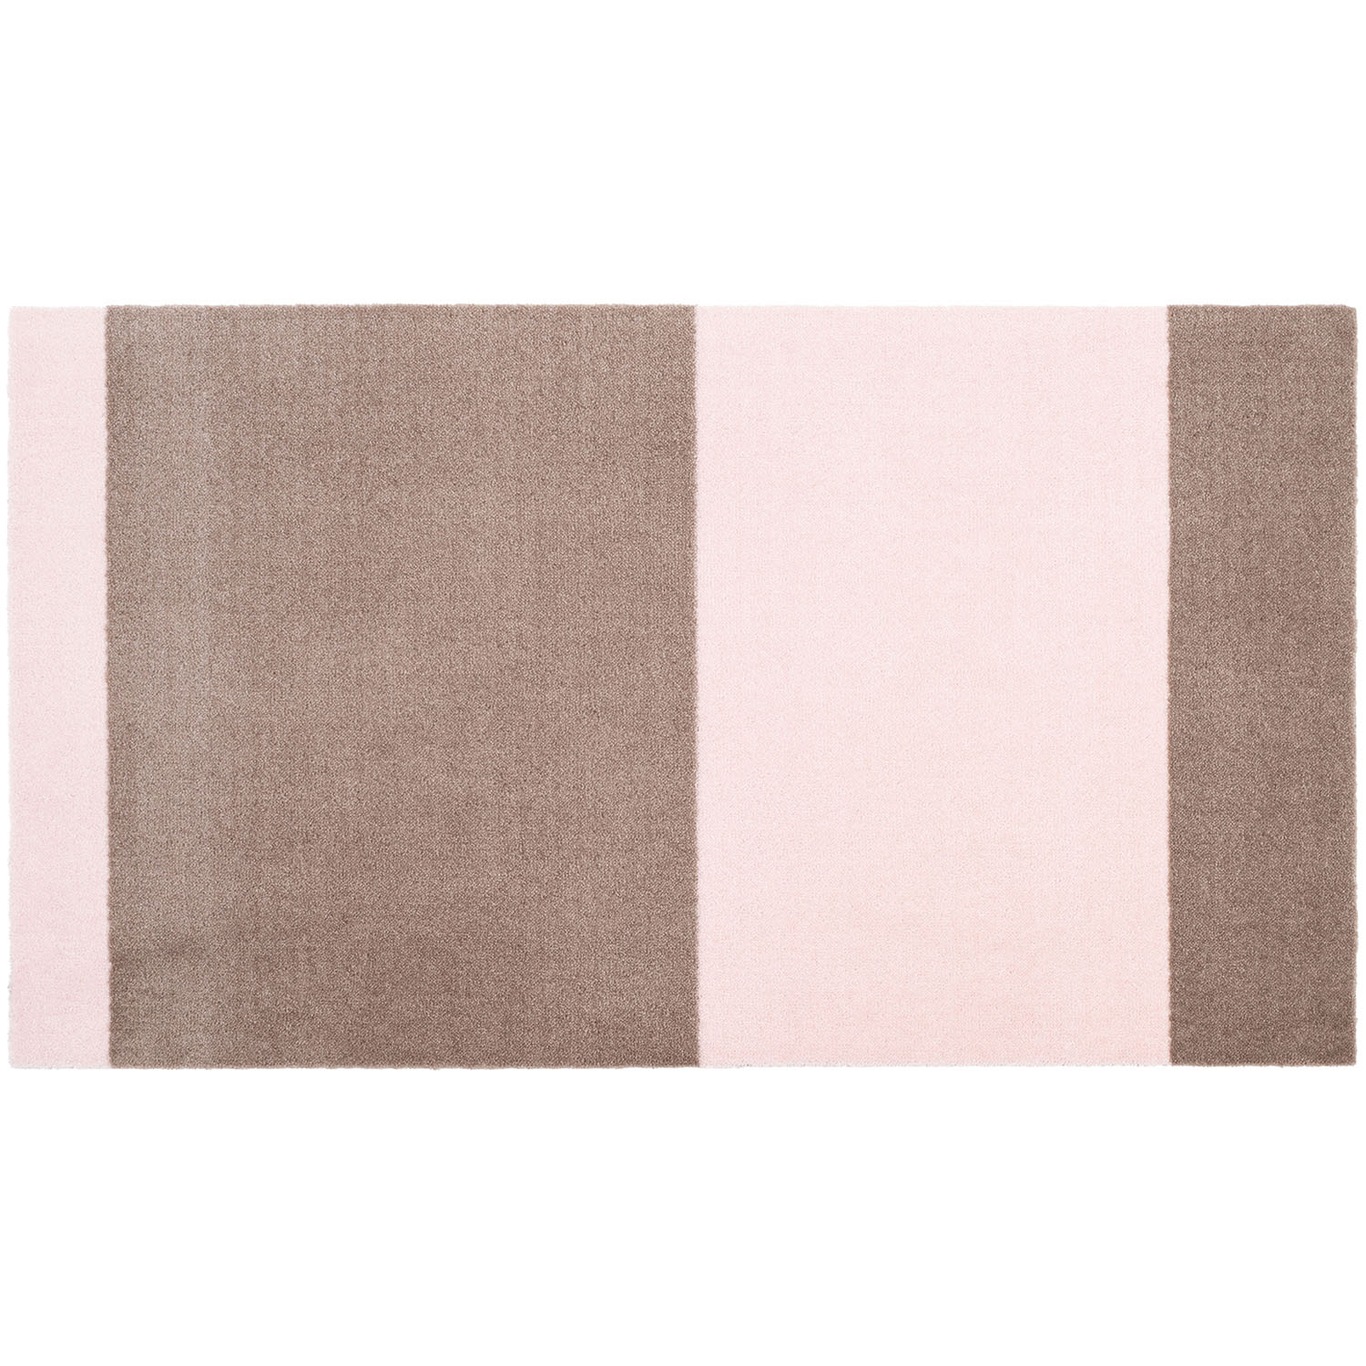 Stripes Teppich Sandfarben/Light Rose, 67x120 cm